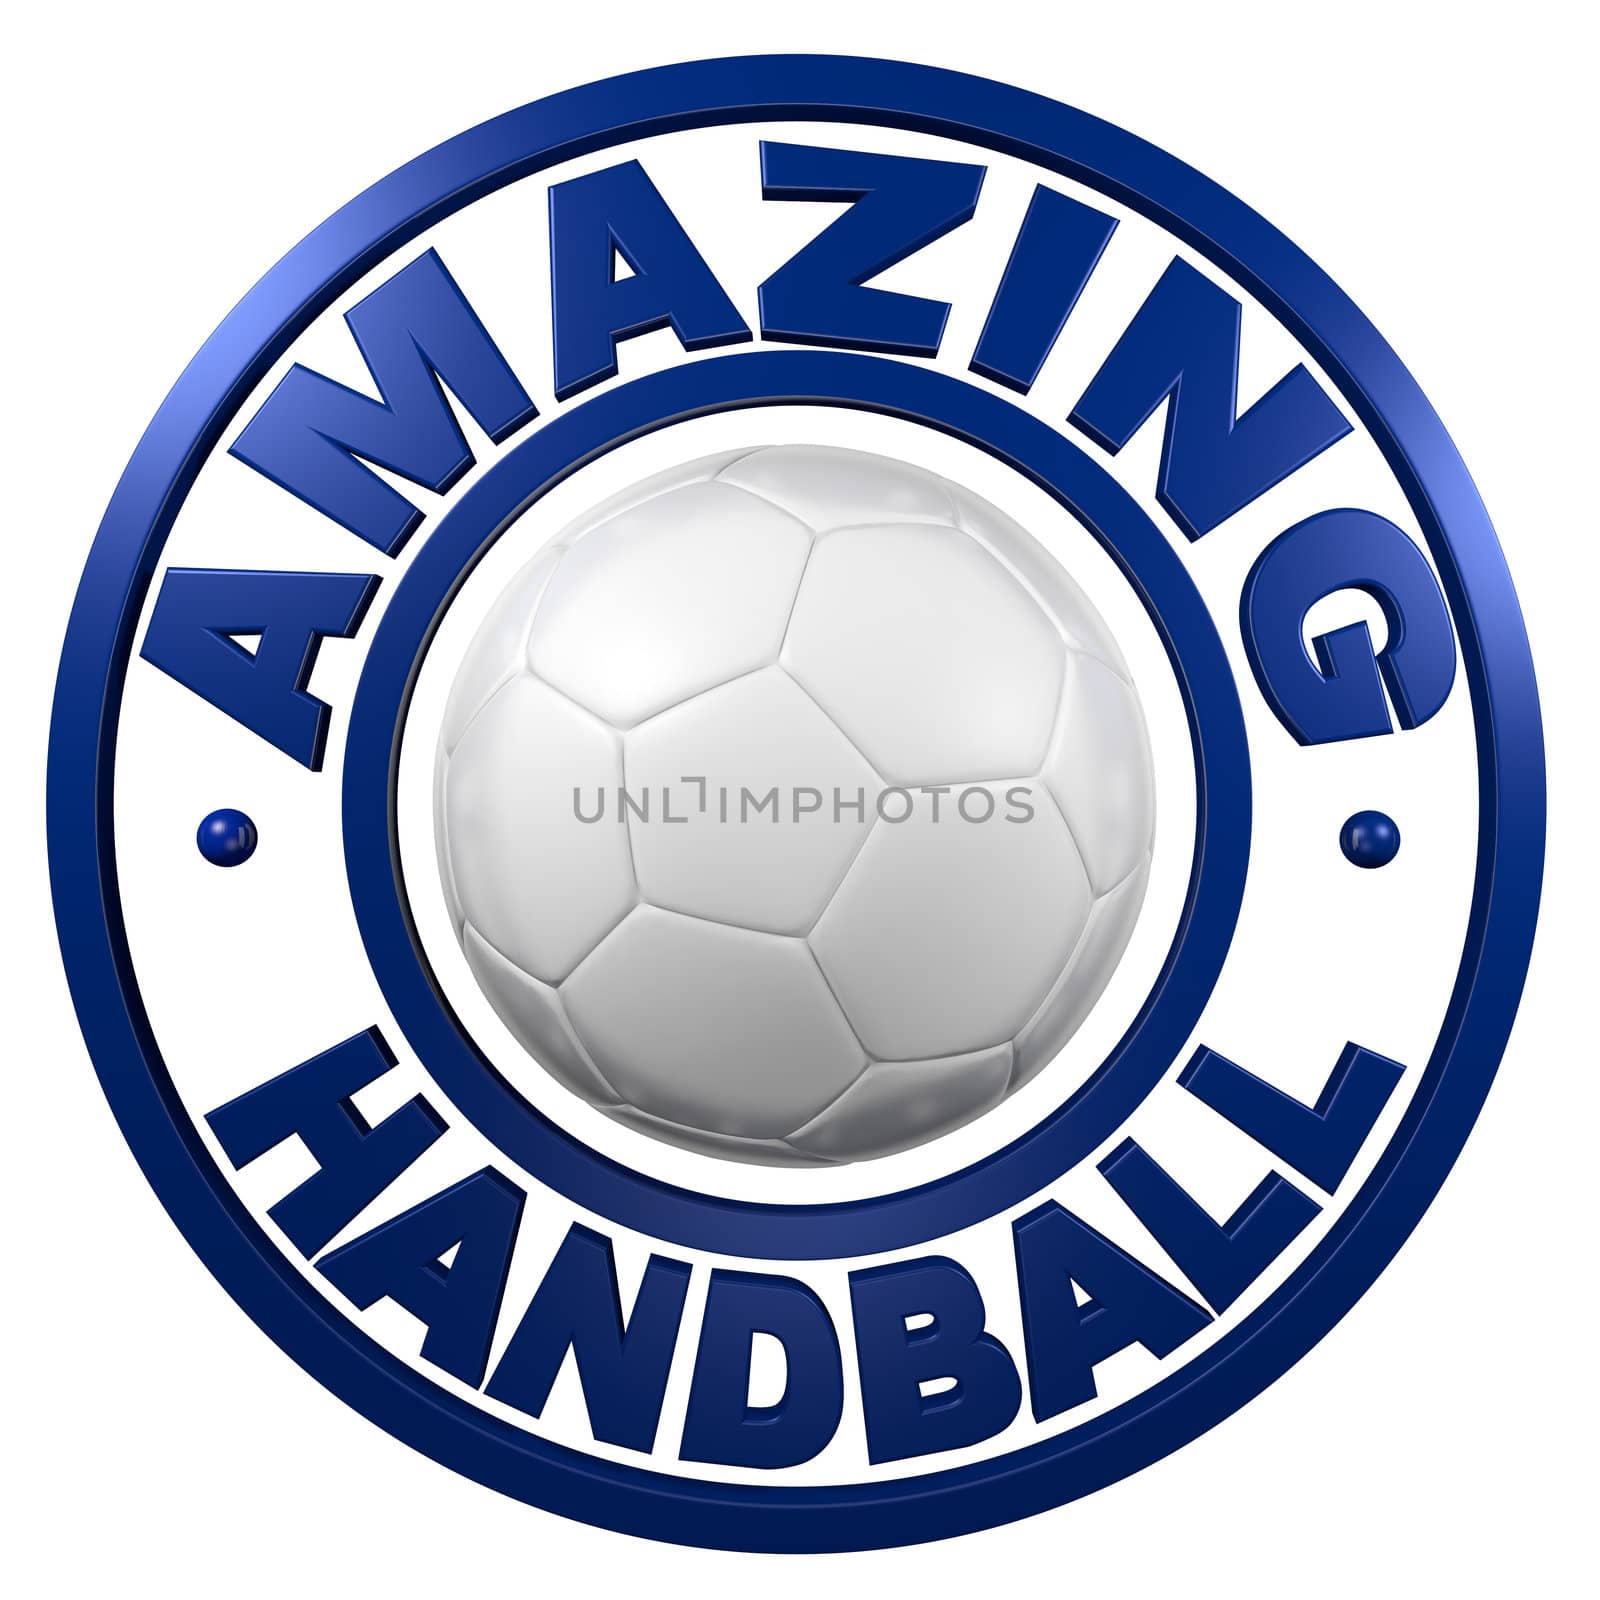 Amazing Handball circular design by shkyo30